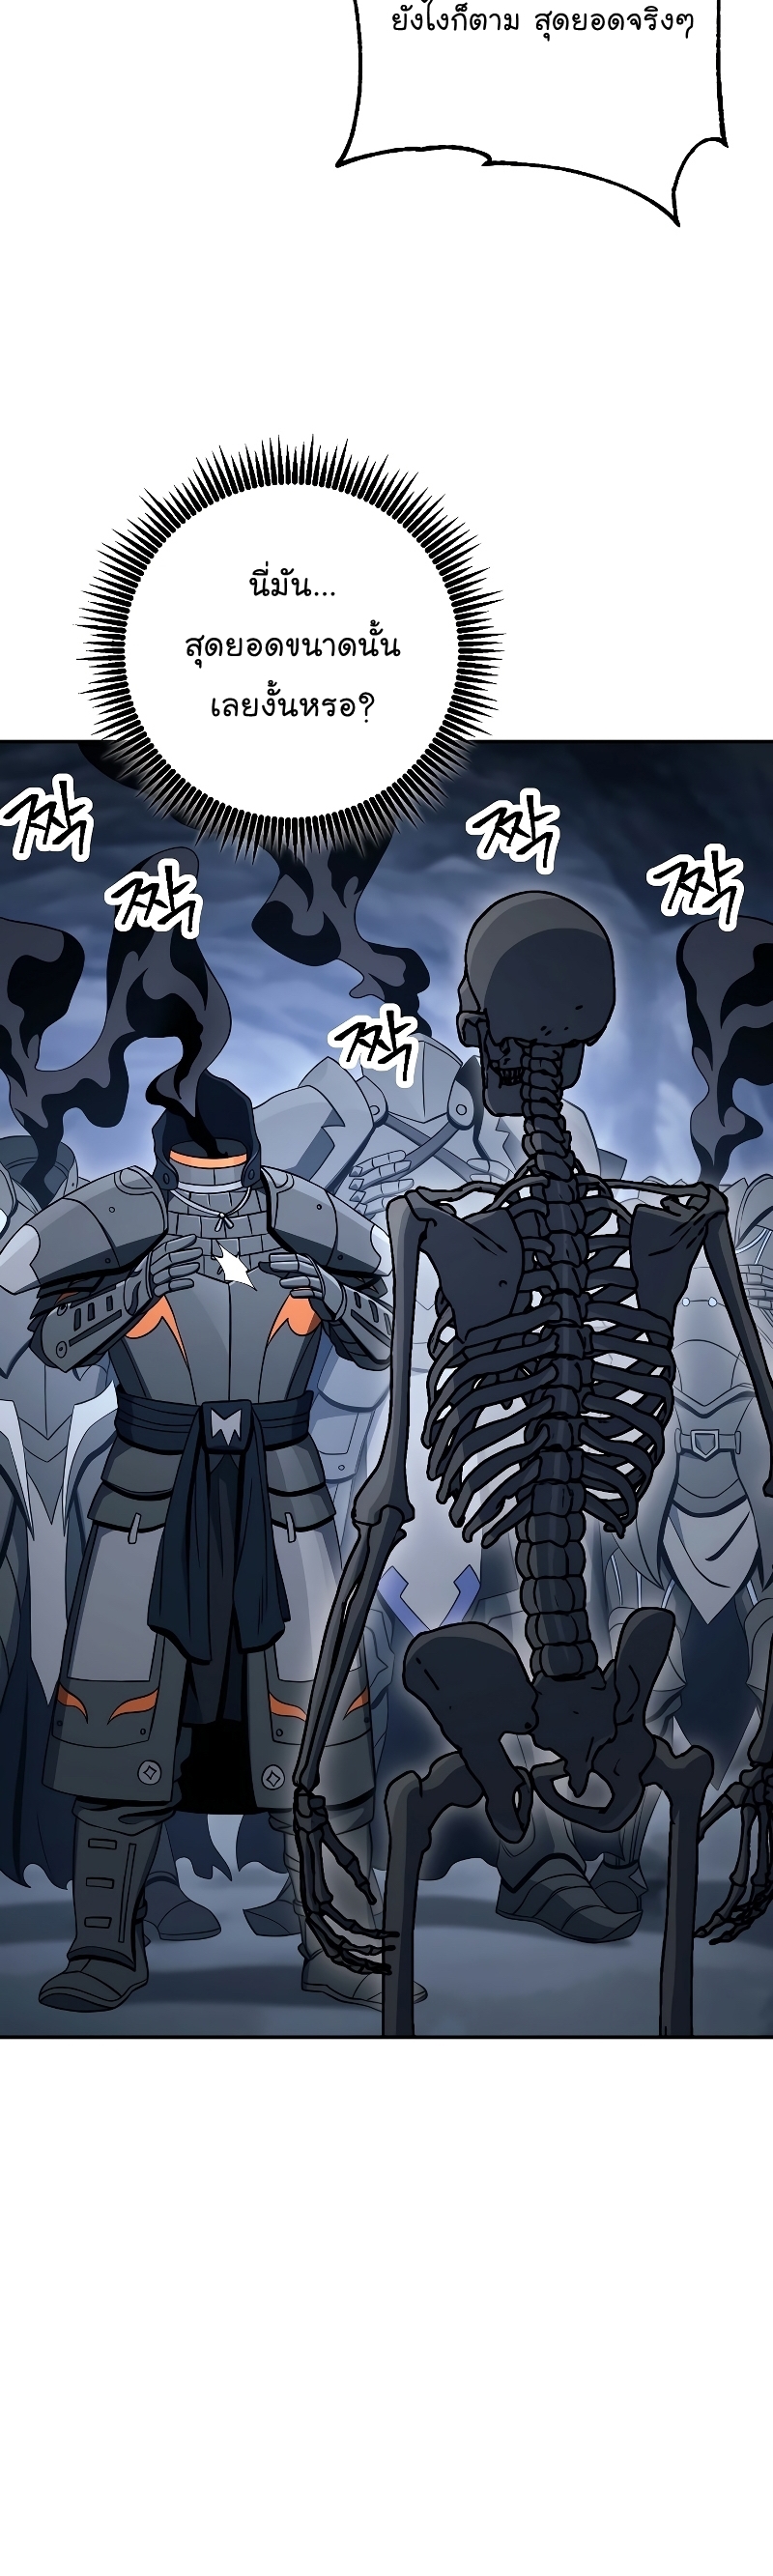 Skeleton Soldier 204 40